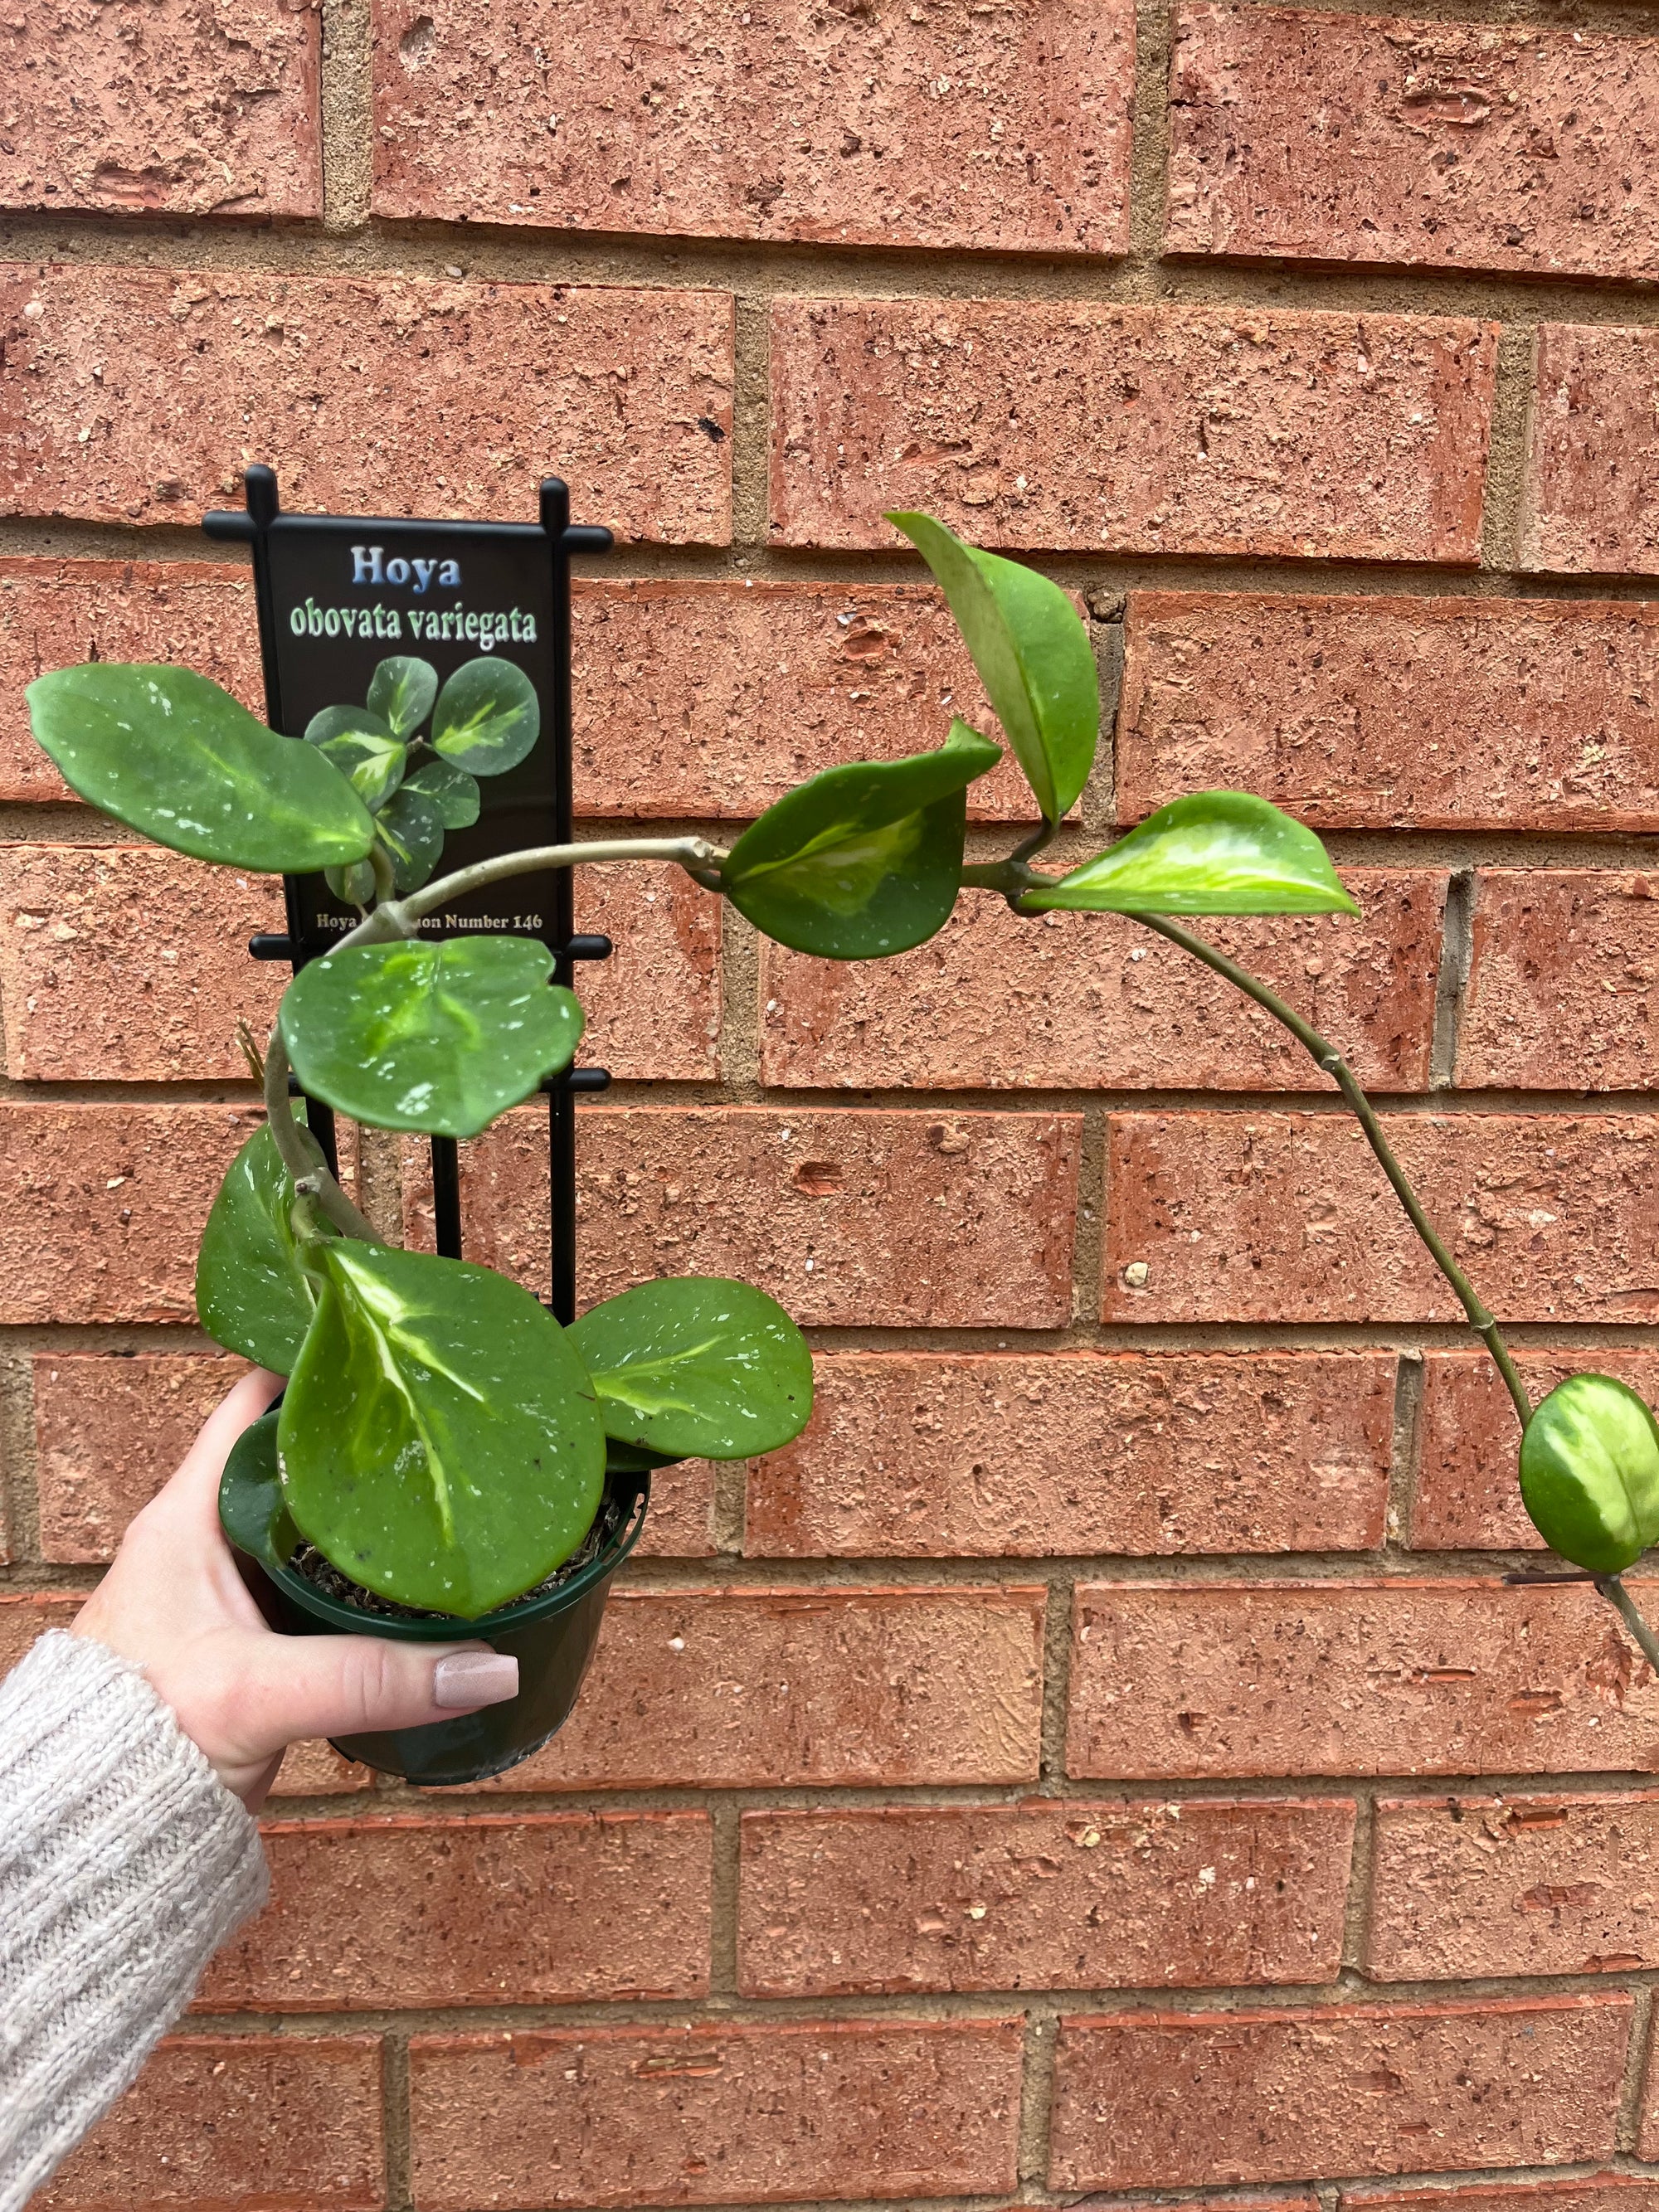 Hoya - Obovata variegata Collection No. 146